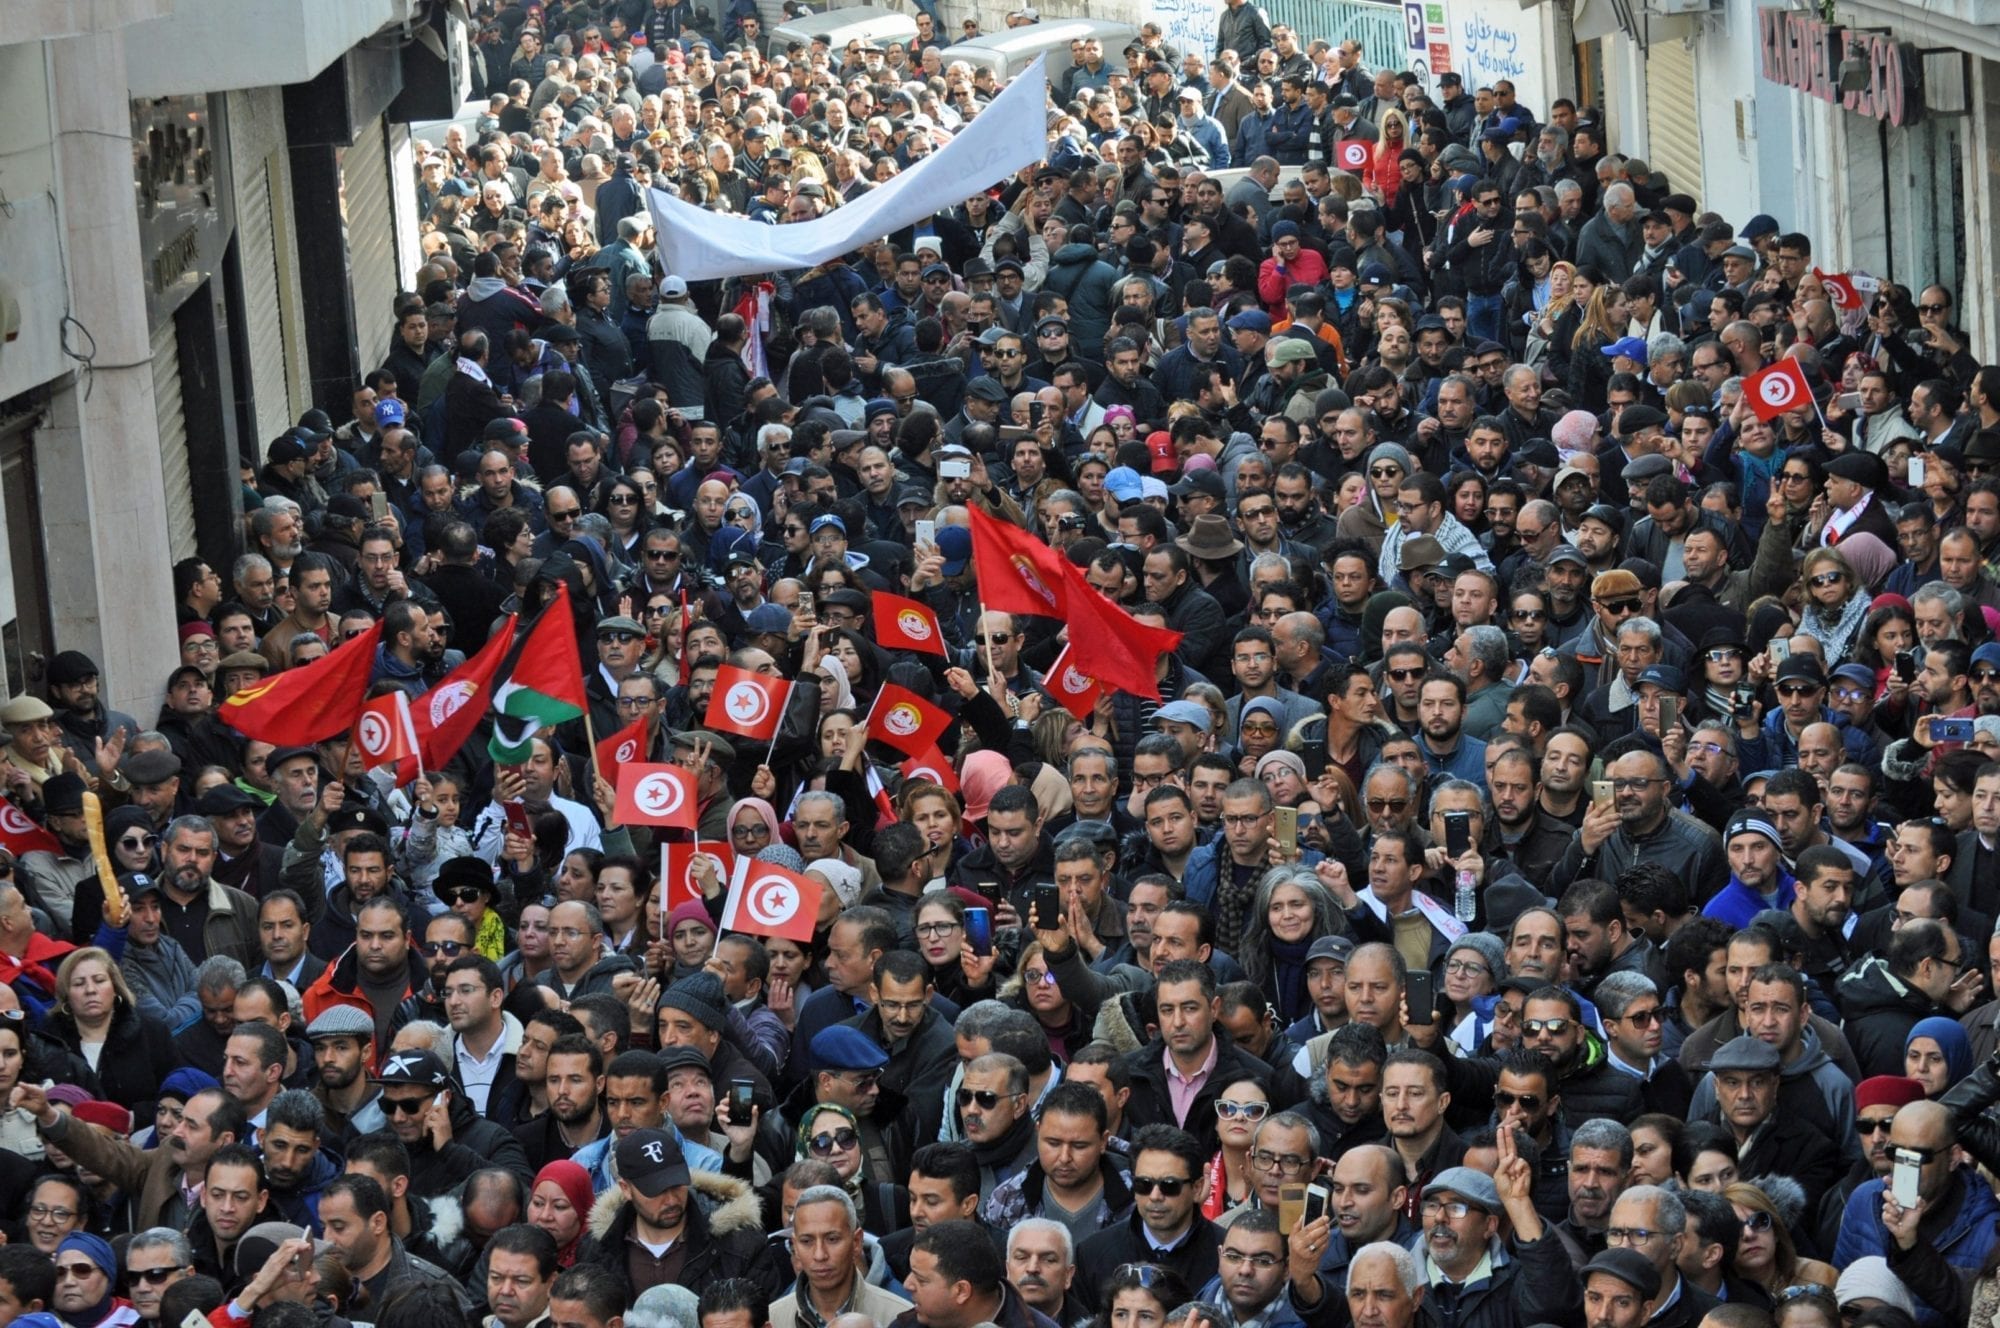 Expulsion Signals Anti-Union Crackdown in Tunisia